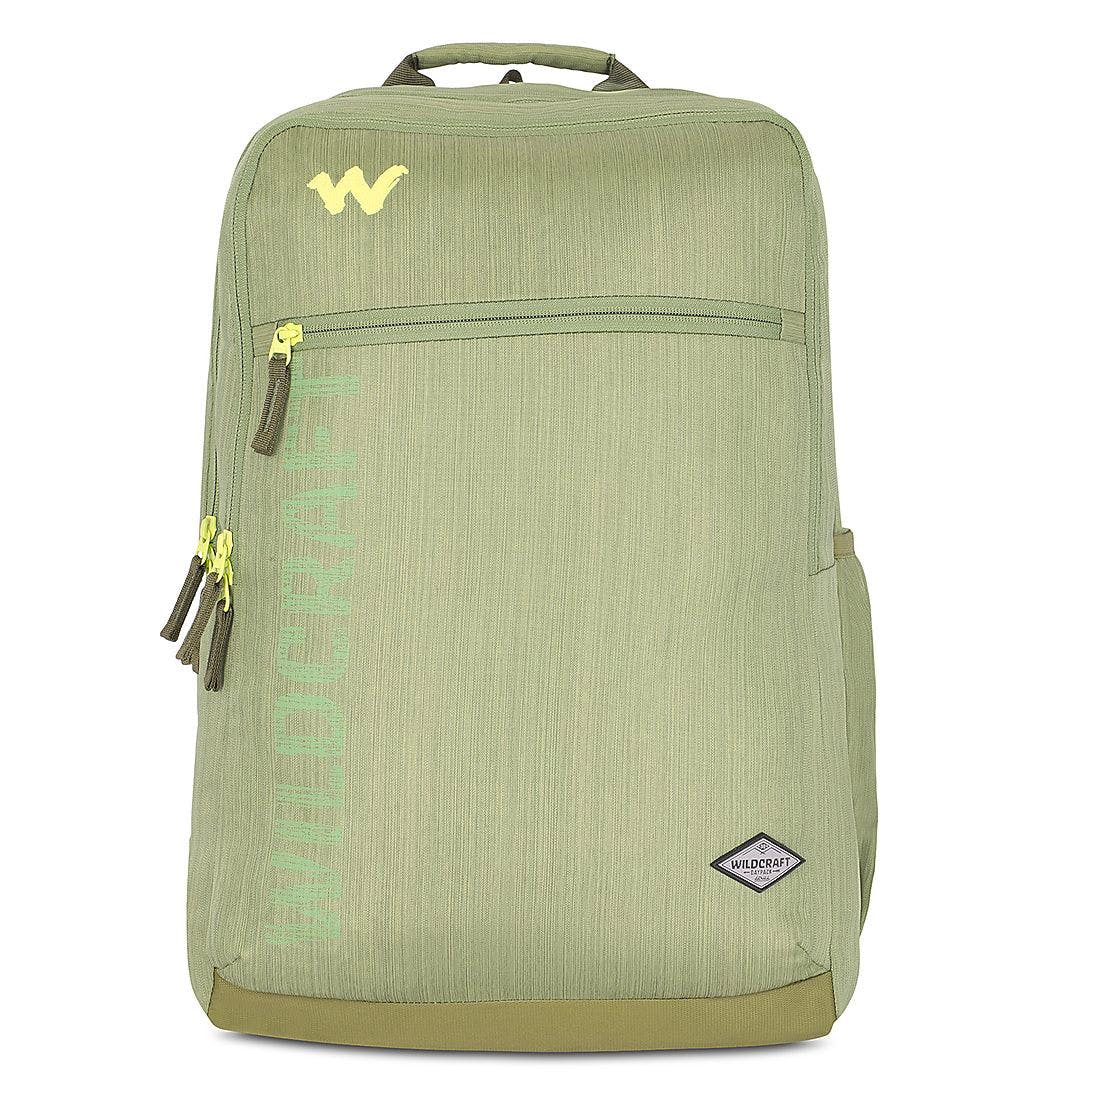 Wildcraft Green Evo 1 Melange Backpack